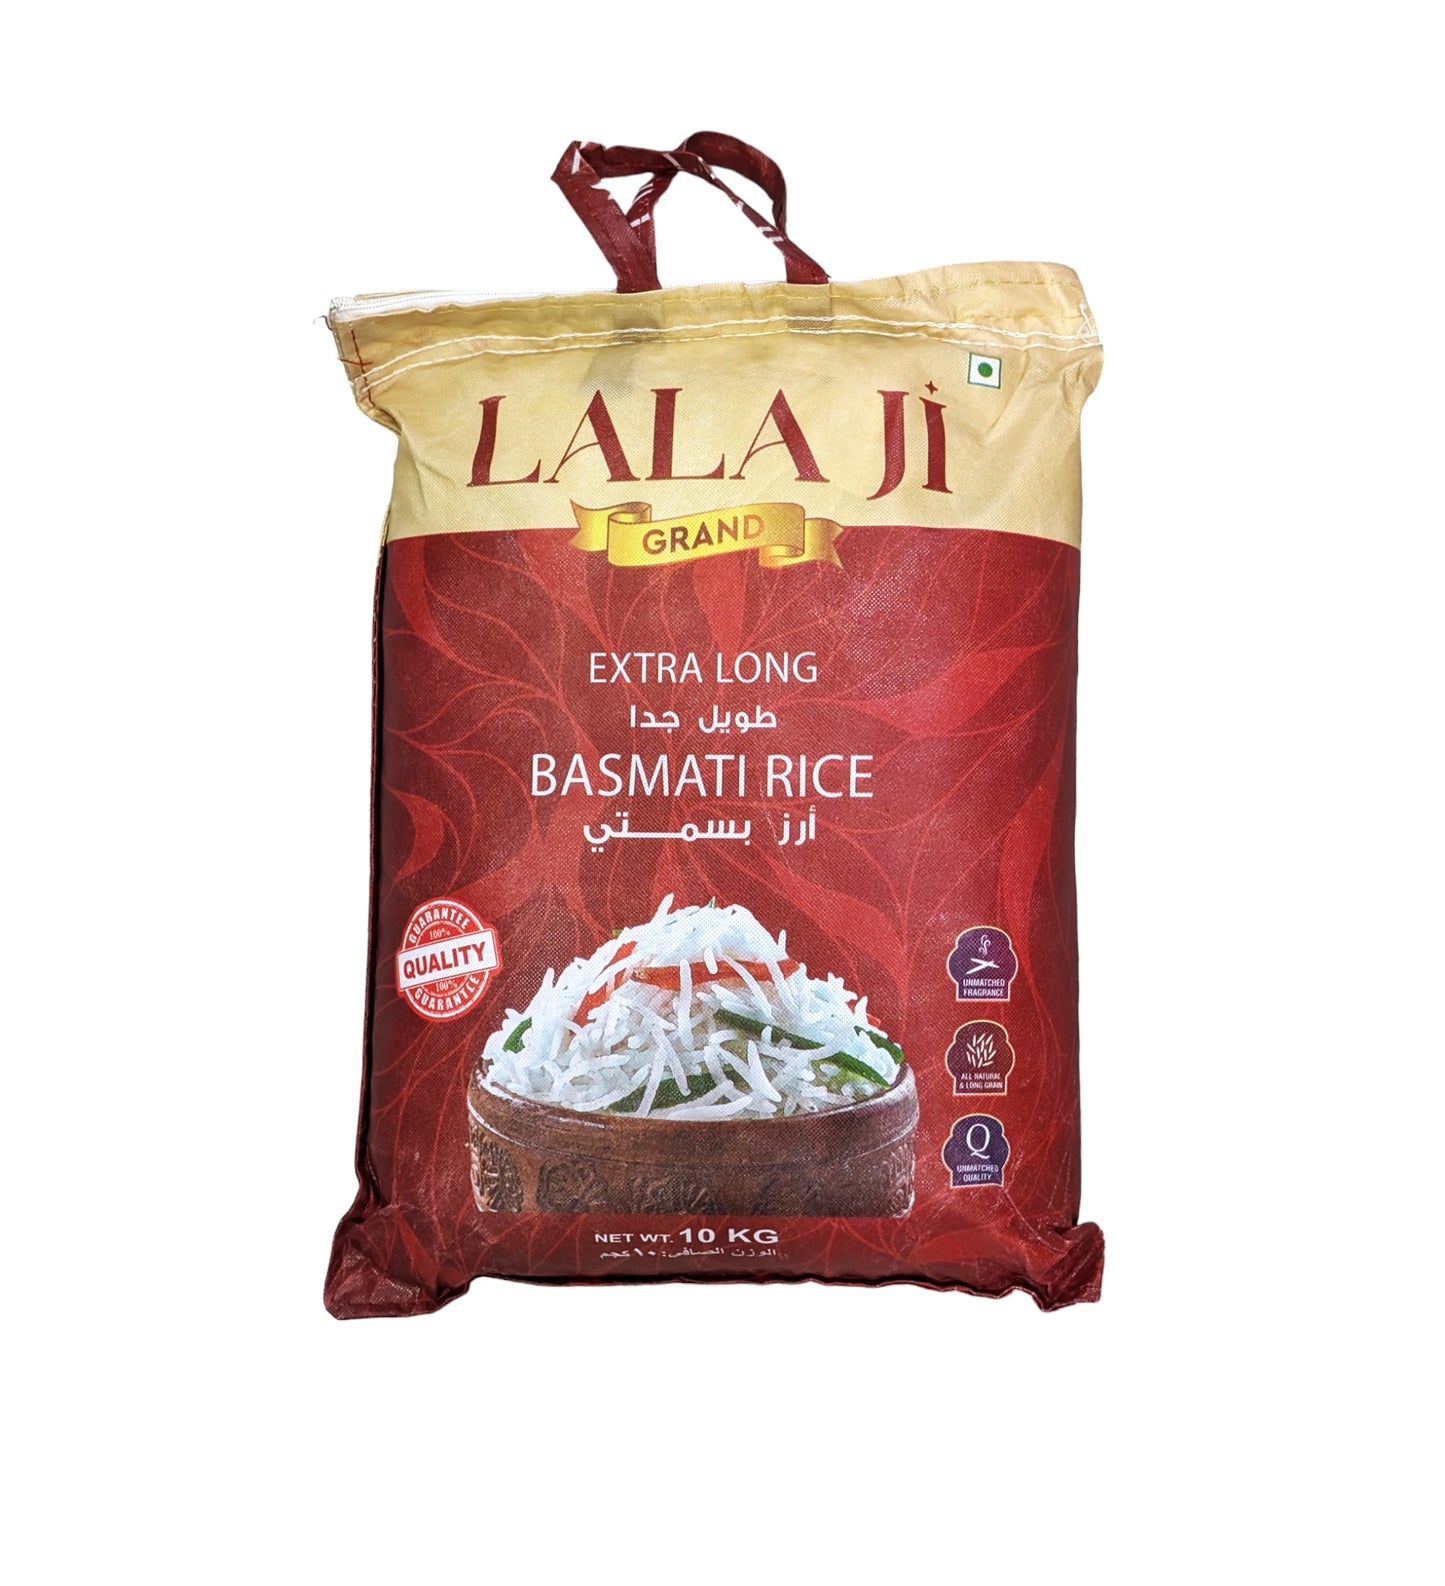 LALA JI Grand Extra Long Basmati Rice 20kg